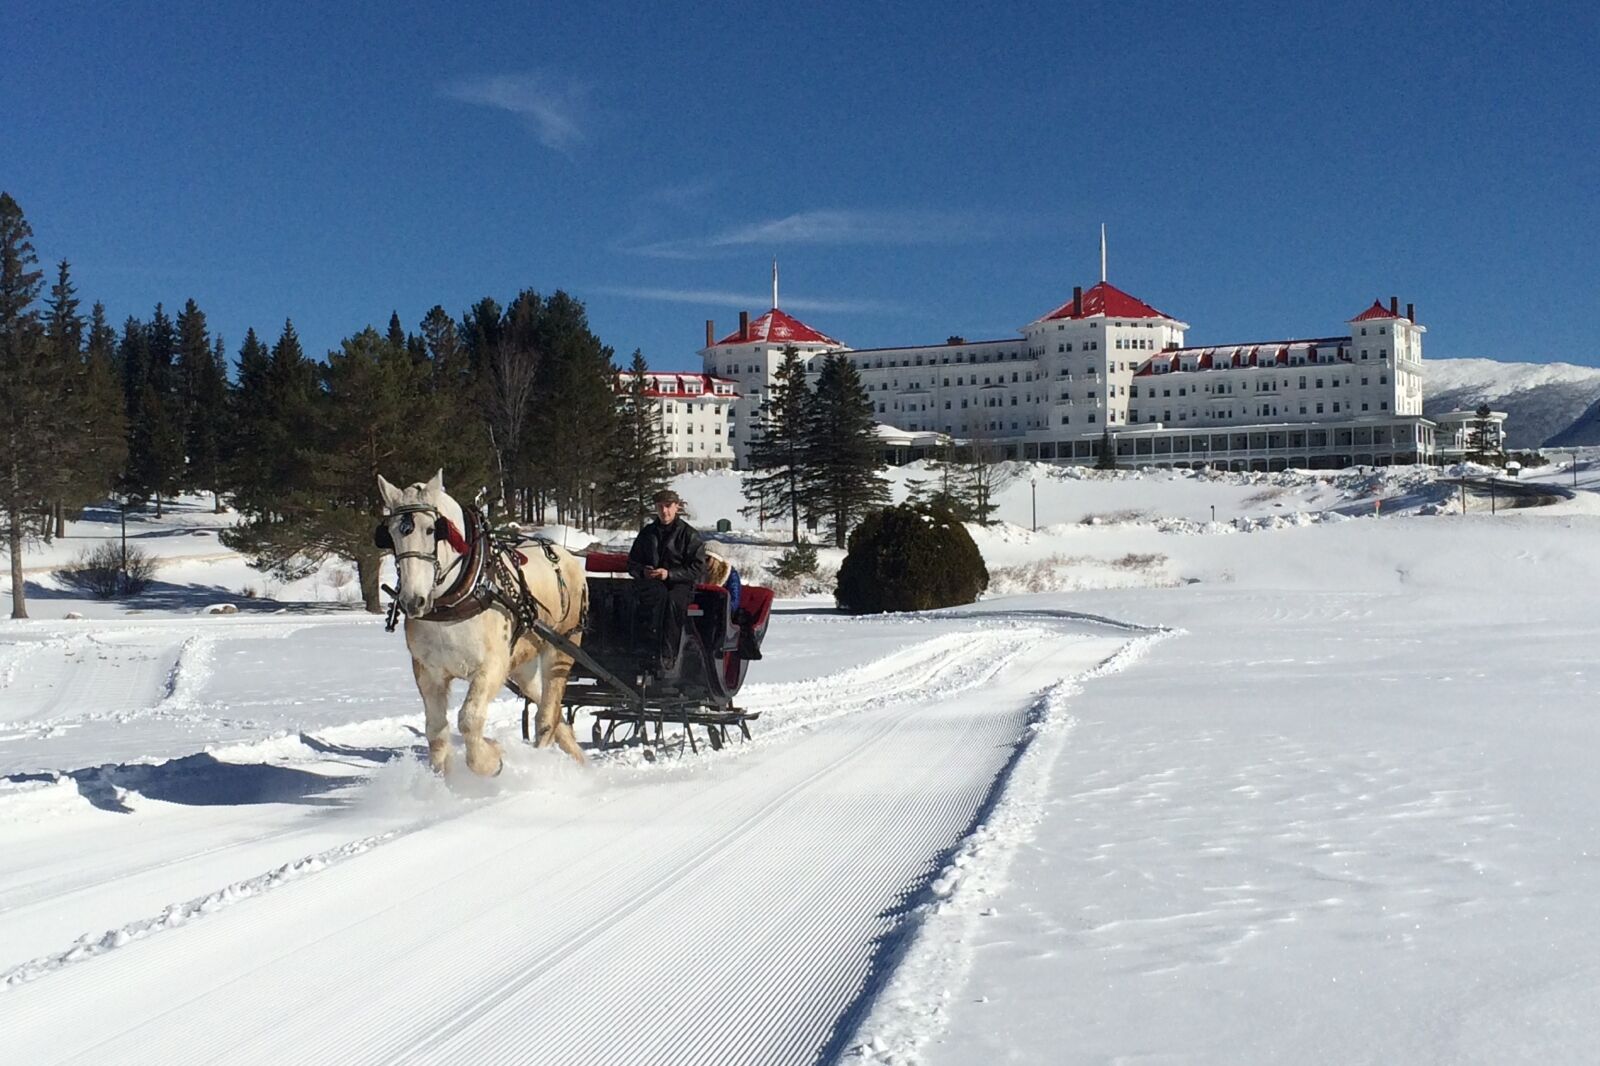 Horse and carriage at Omni Mount Washington Resort